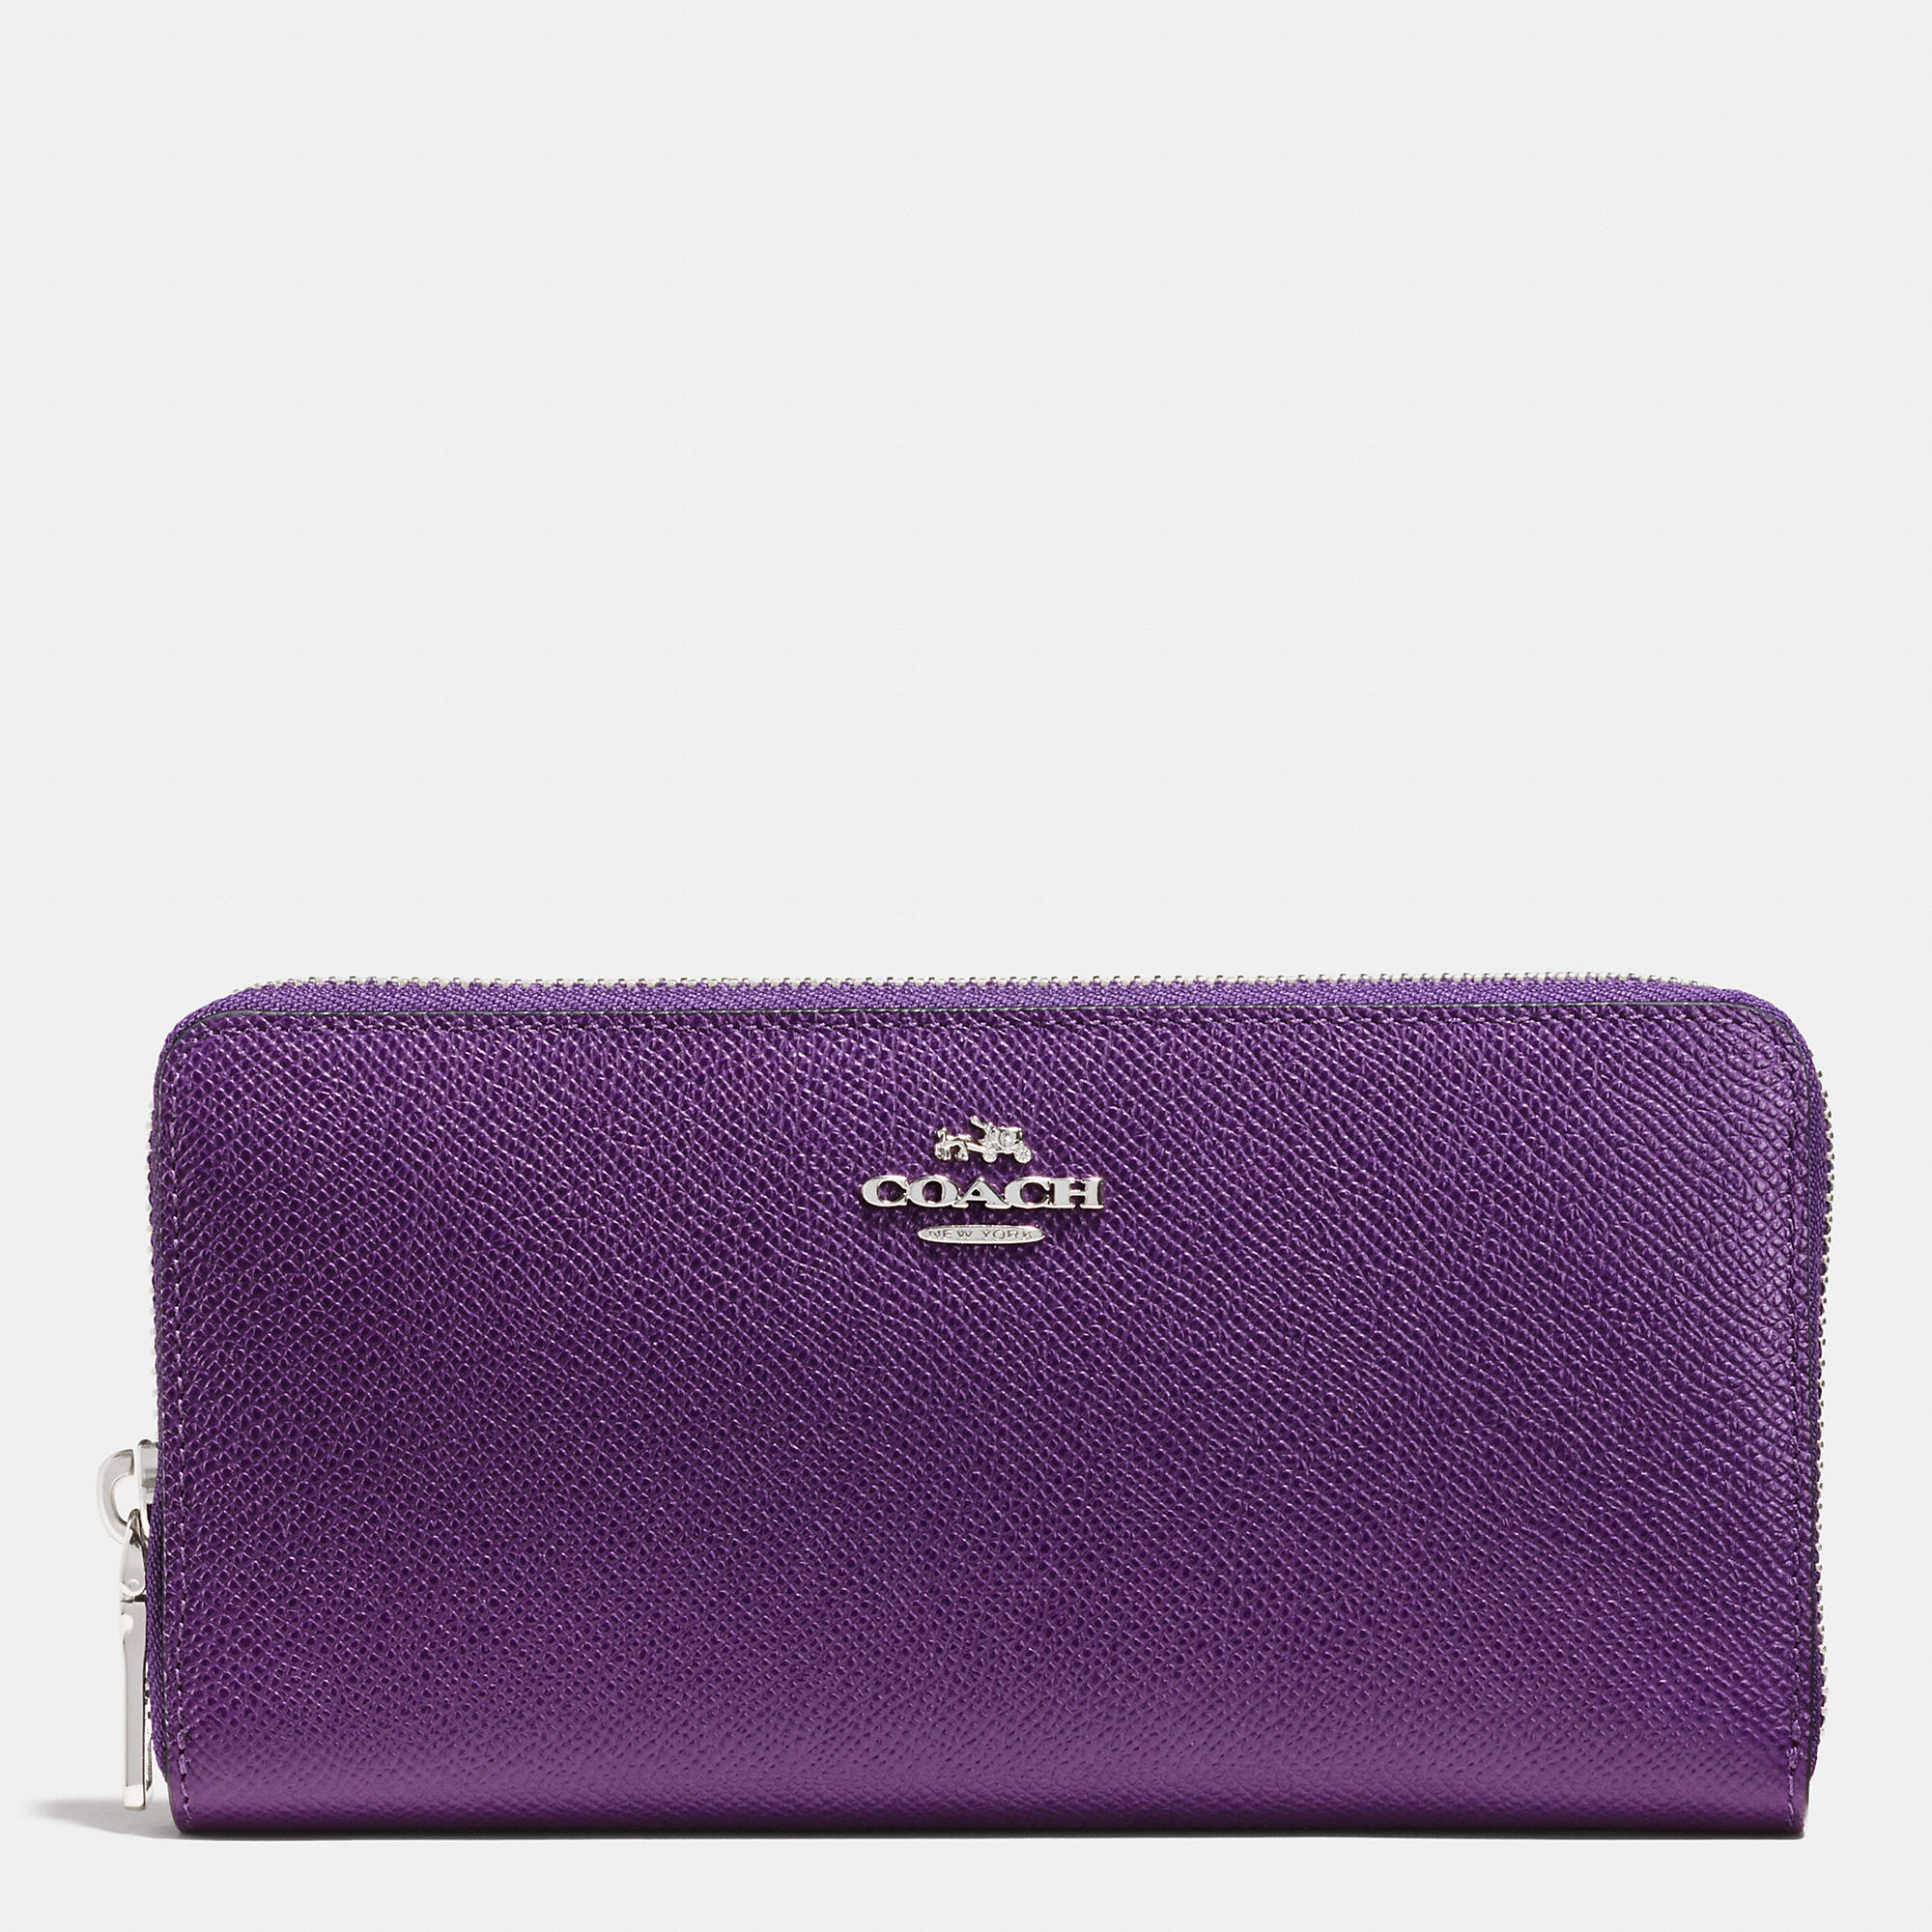 Lyst - Coach Accordion Zip Wallet In Crossgrain Leather in Purple